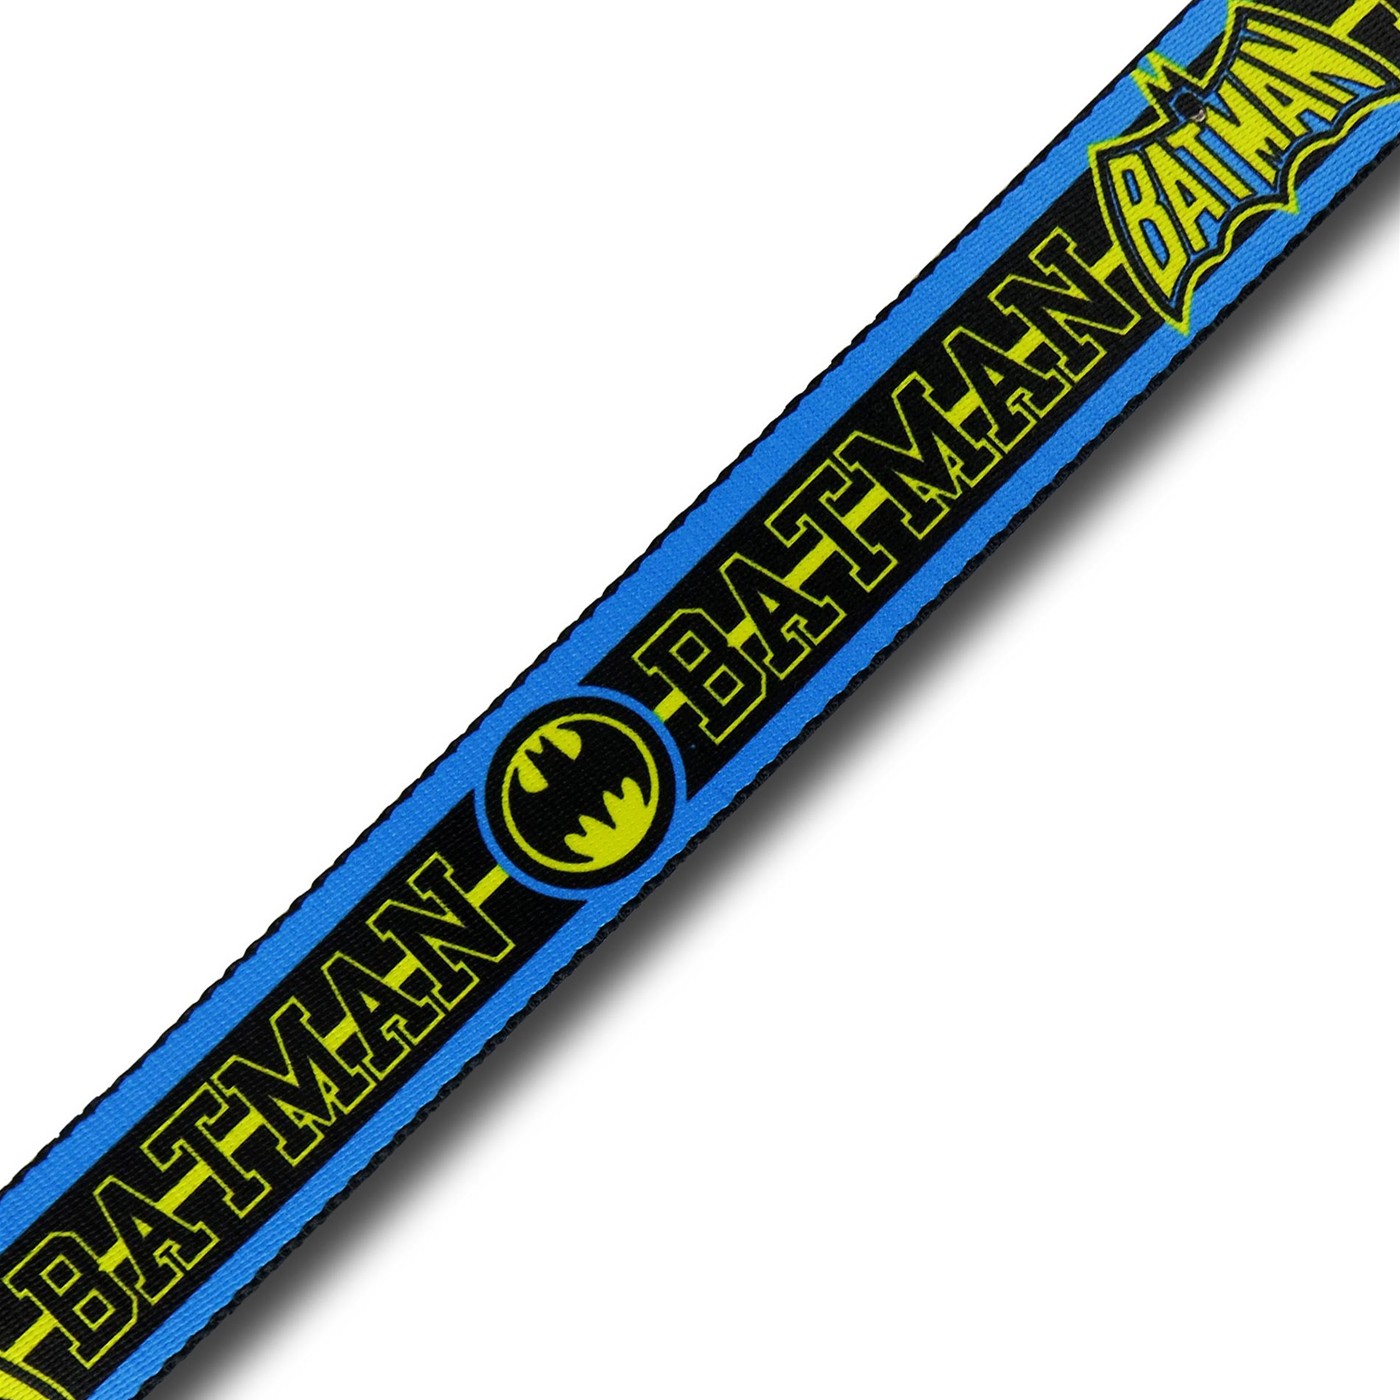 Batman Yellow & Blue Web Belt